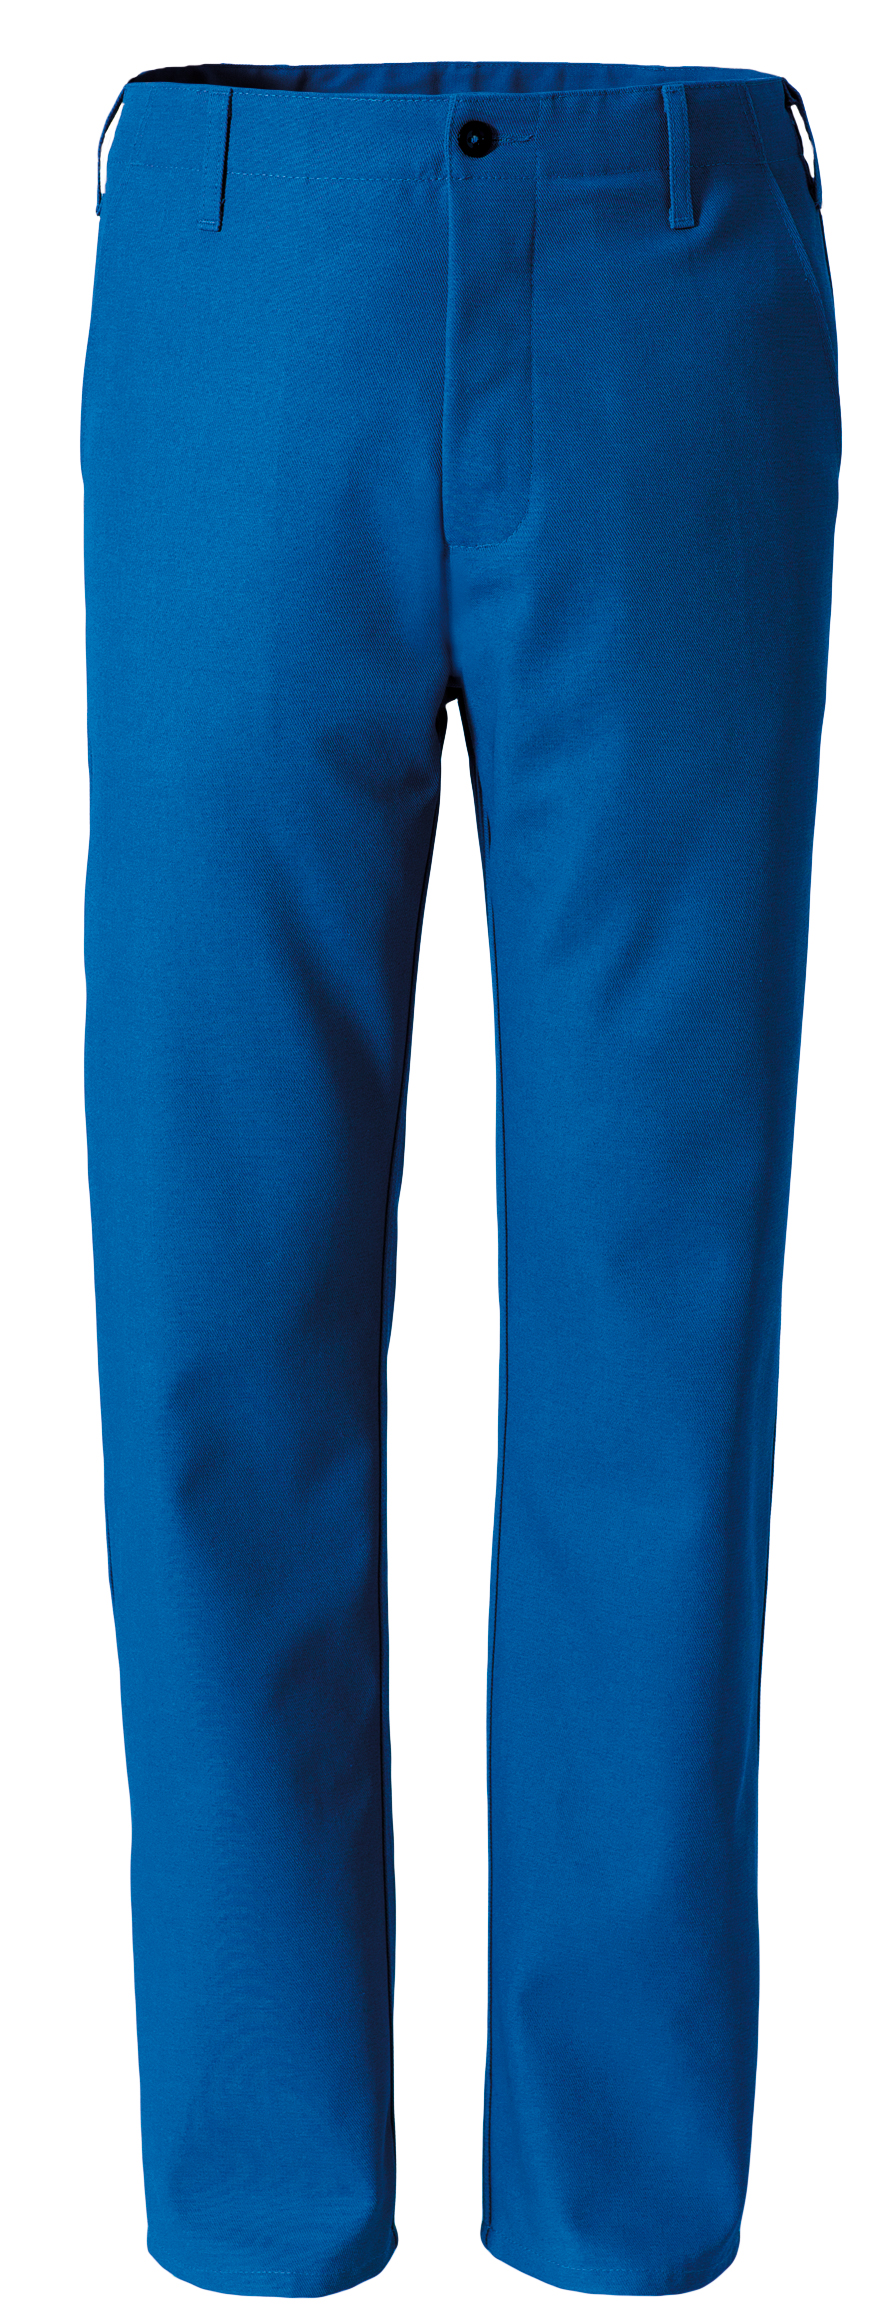 ROFA Bundhose Arbeitshose Berufshose Workerhose Arbeitskleidung Berufskleidung OK Standard kornblau ca 330 g